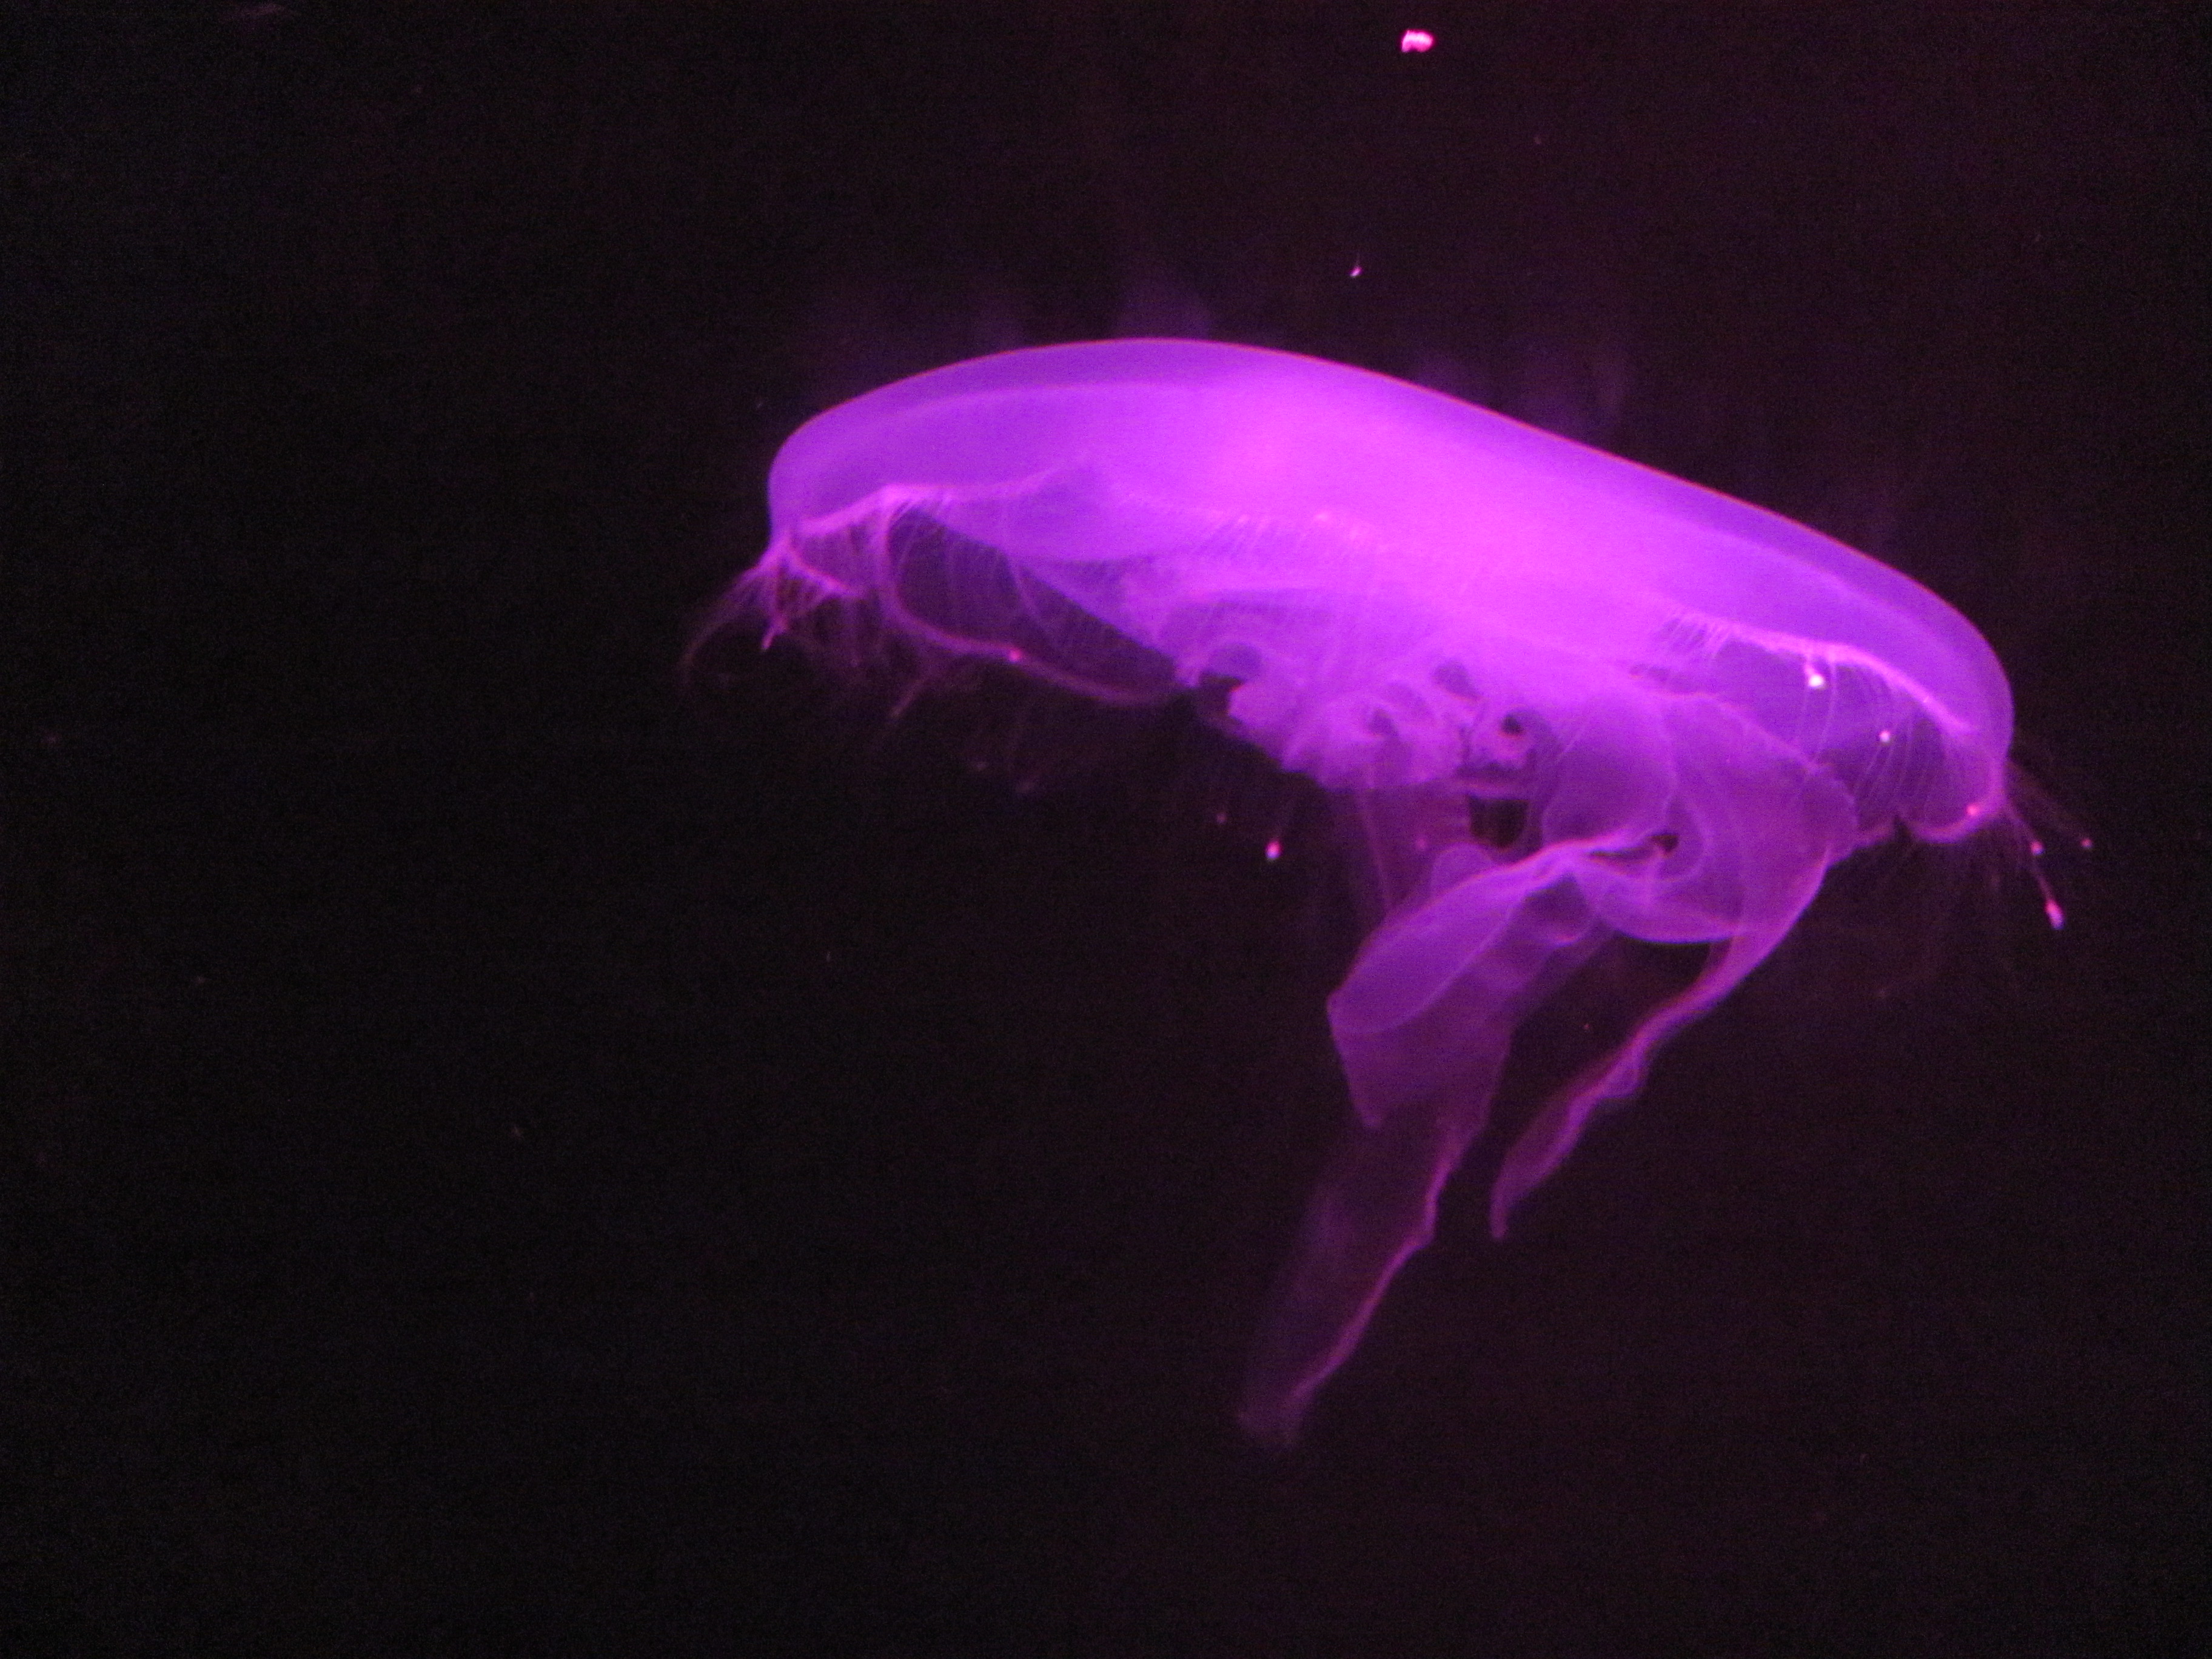 Neon Jellyfish wallpaper > Neon Jellyfish Papel de parede > Neon Jellyfish Fondos 